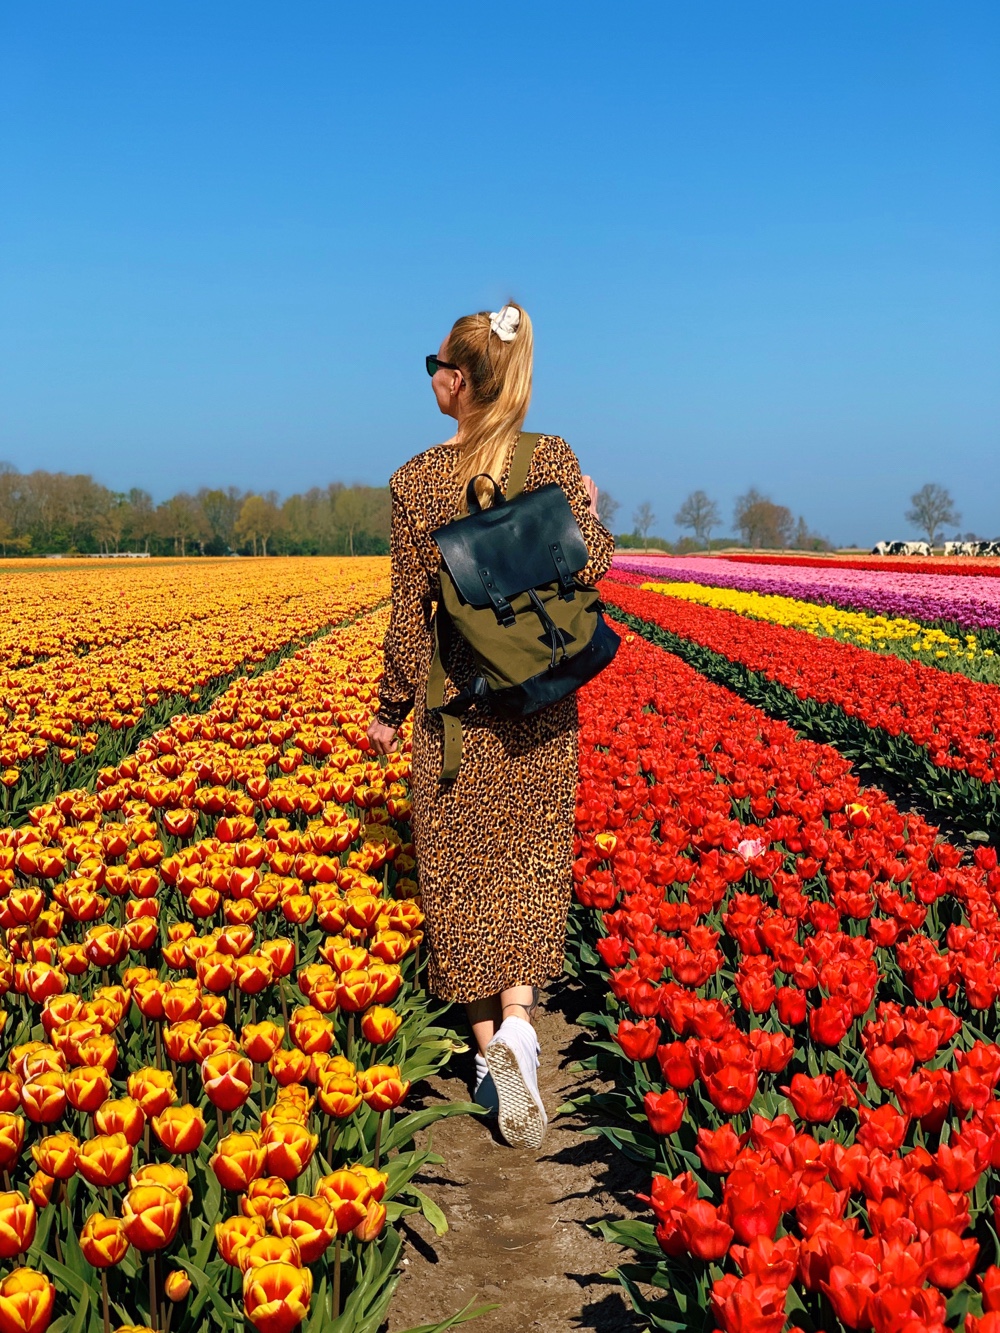 Hollandse tulpenvelden